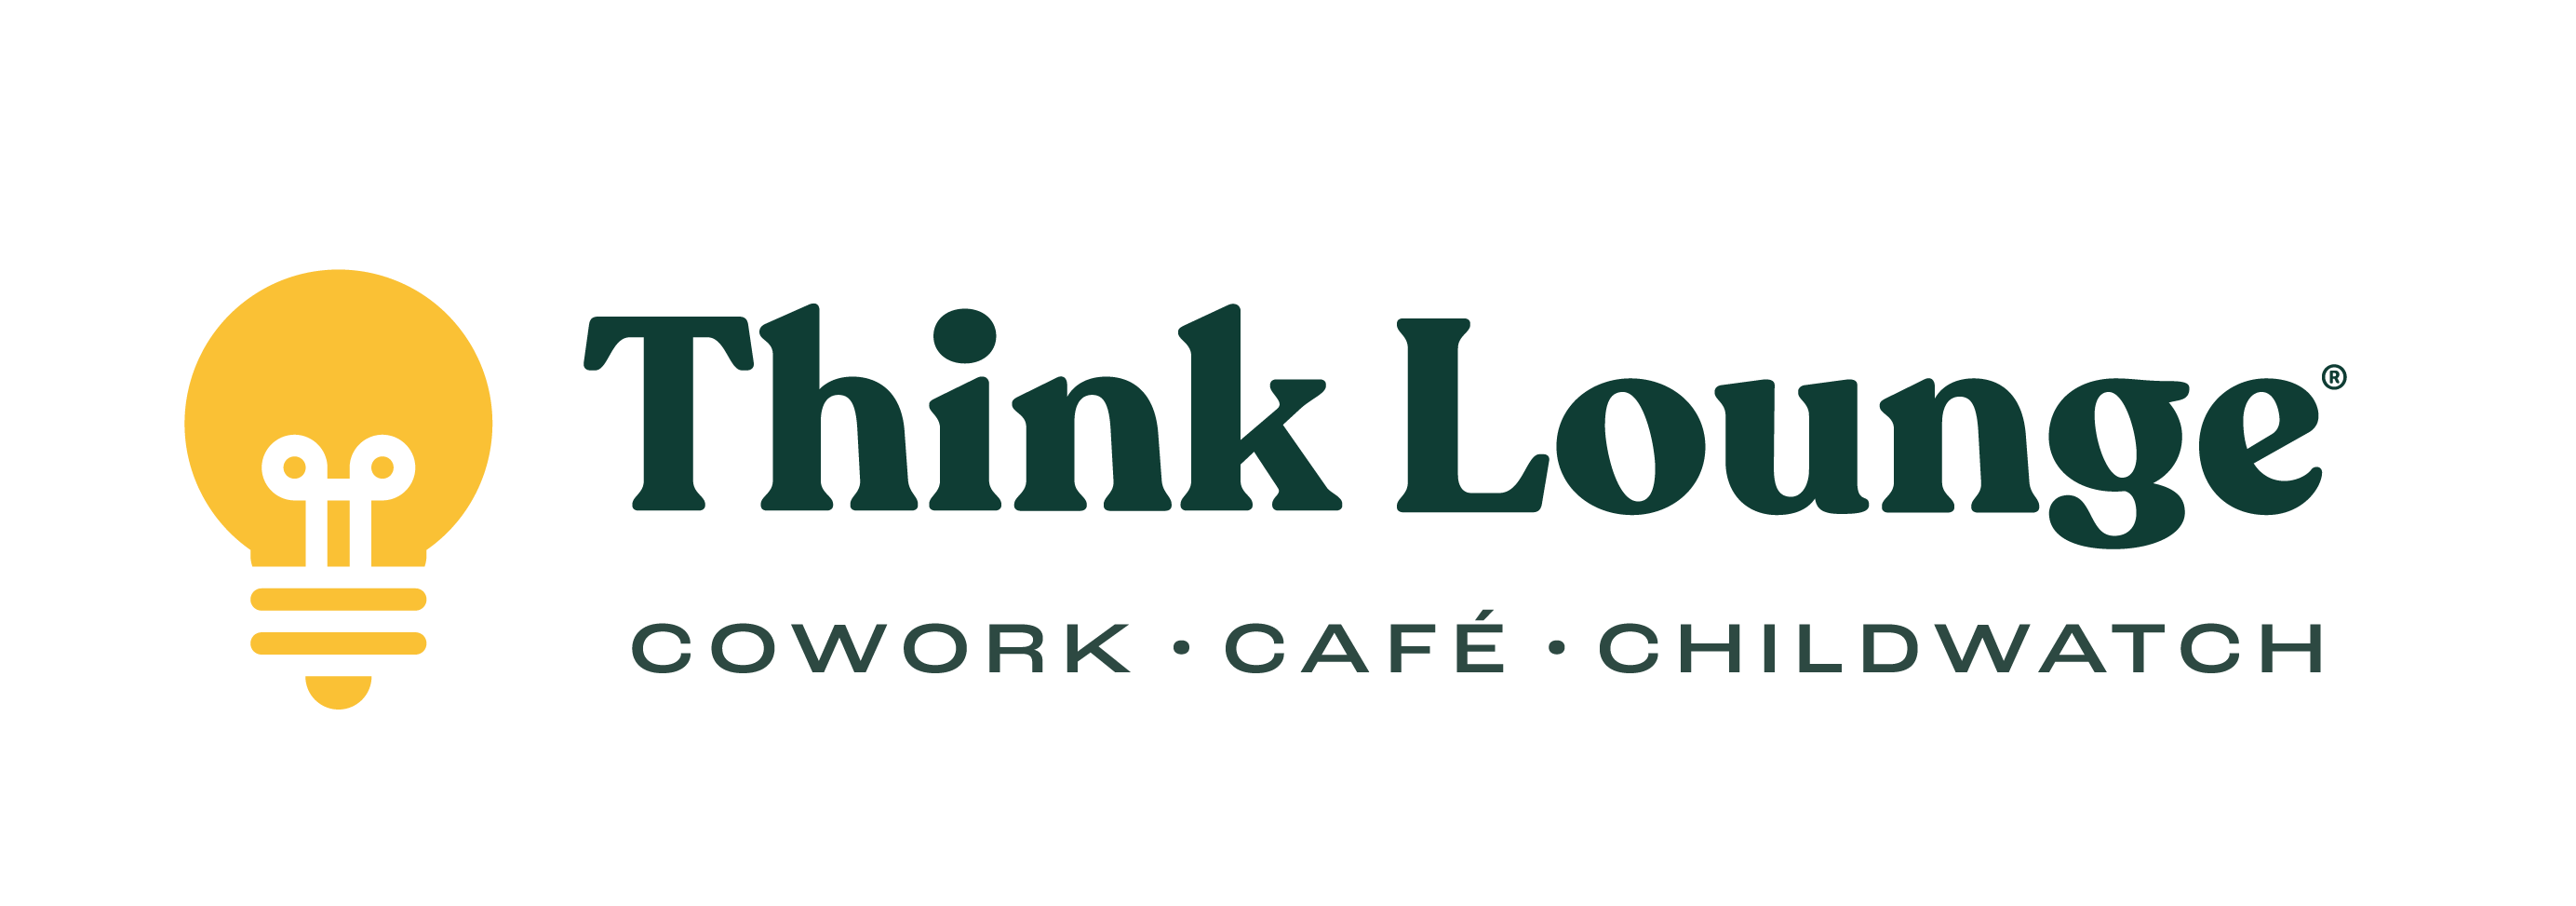 ThinkLounge_CCC_Logo copy 01 Think Lounge Full Color horizontal